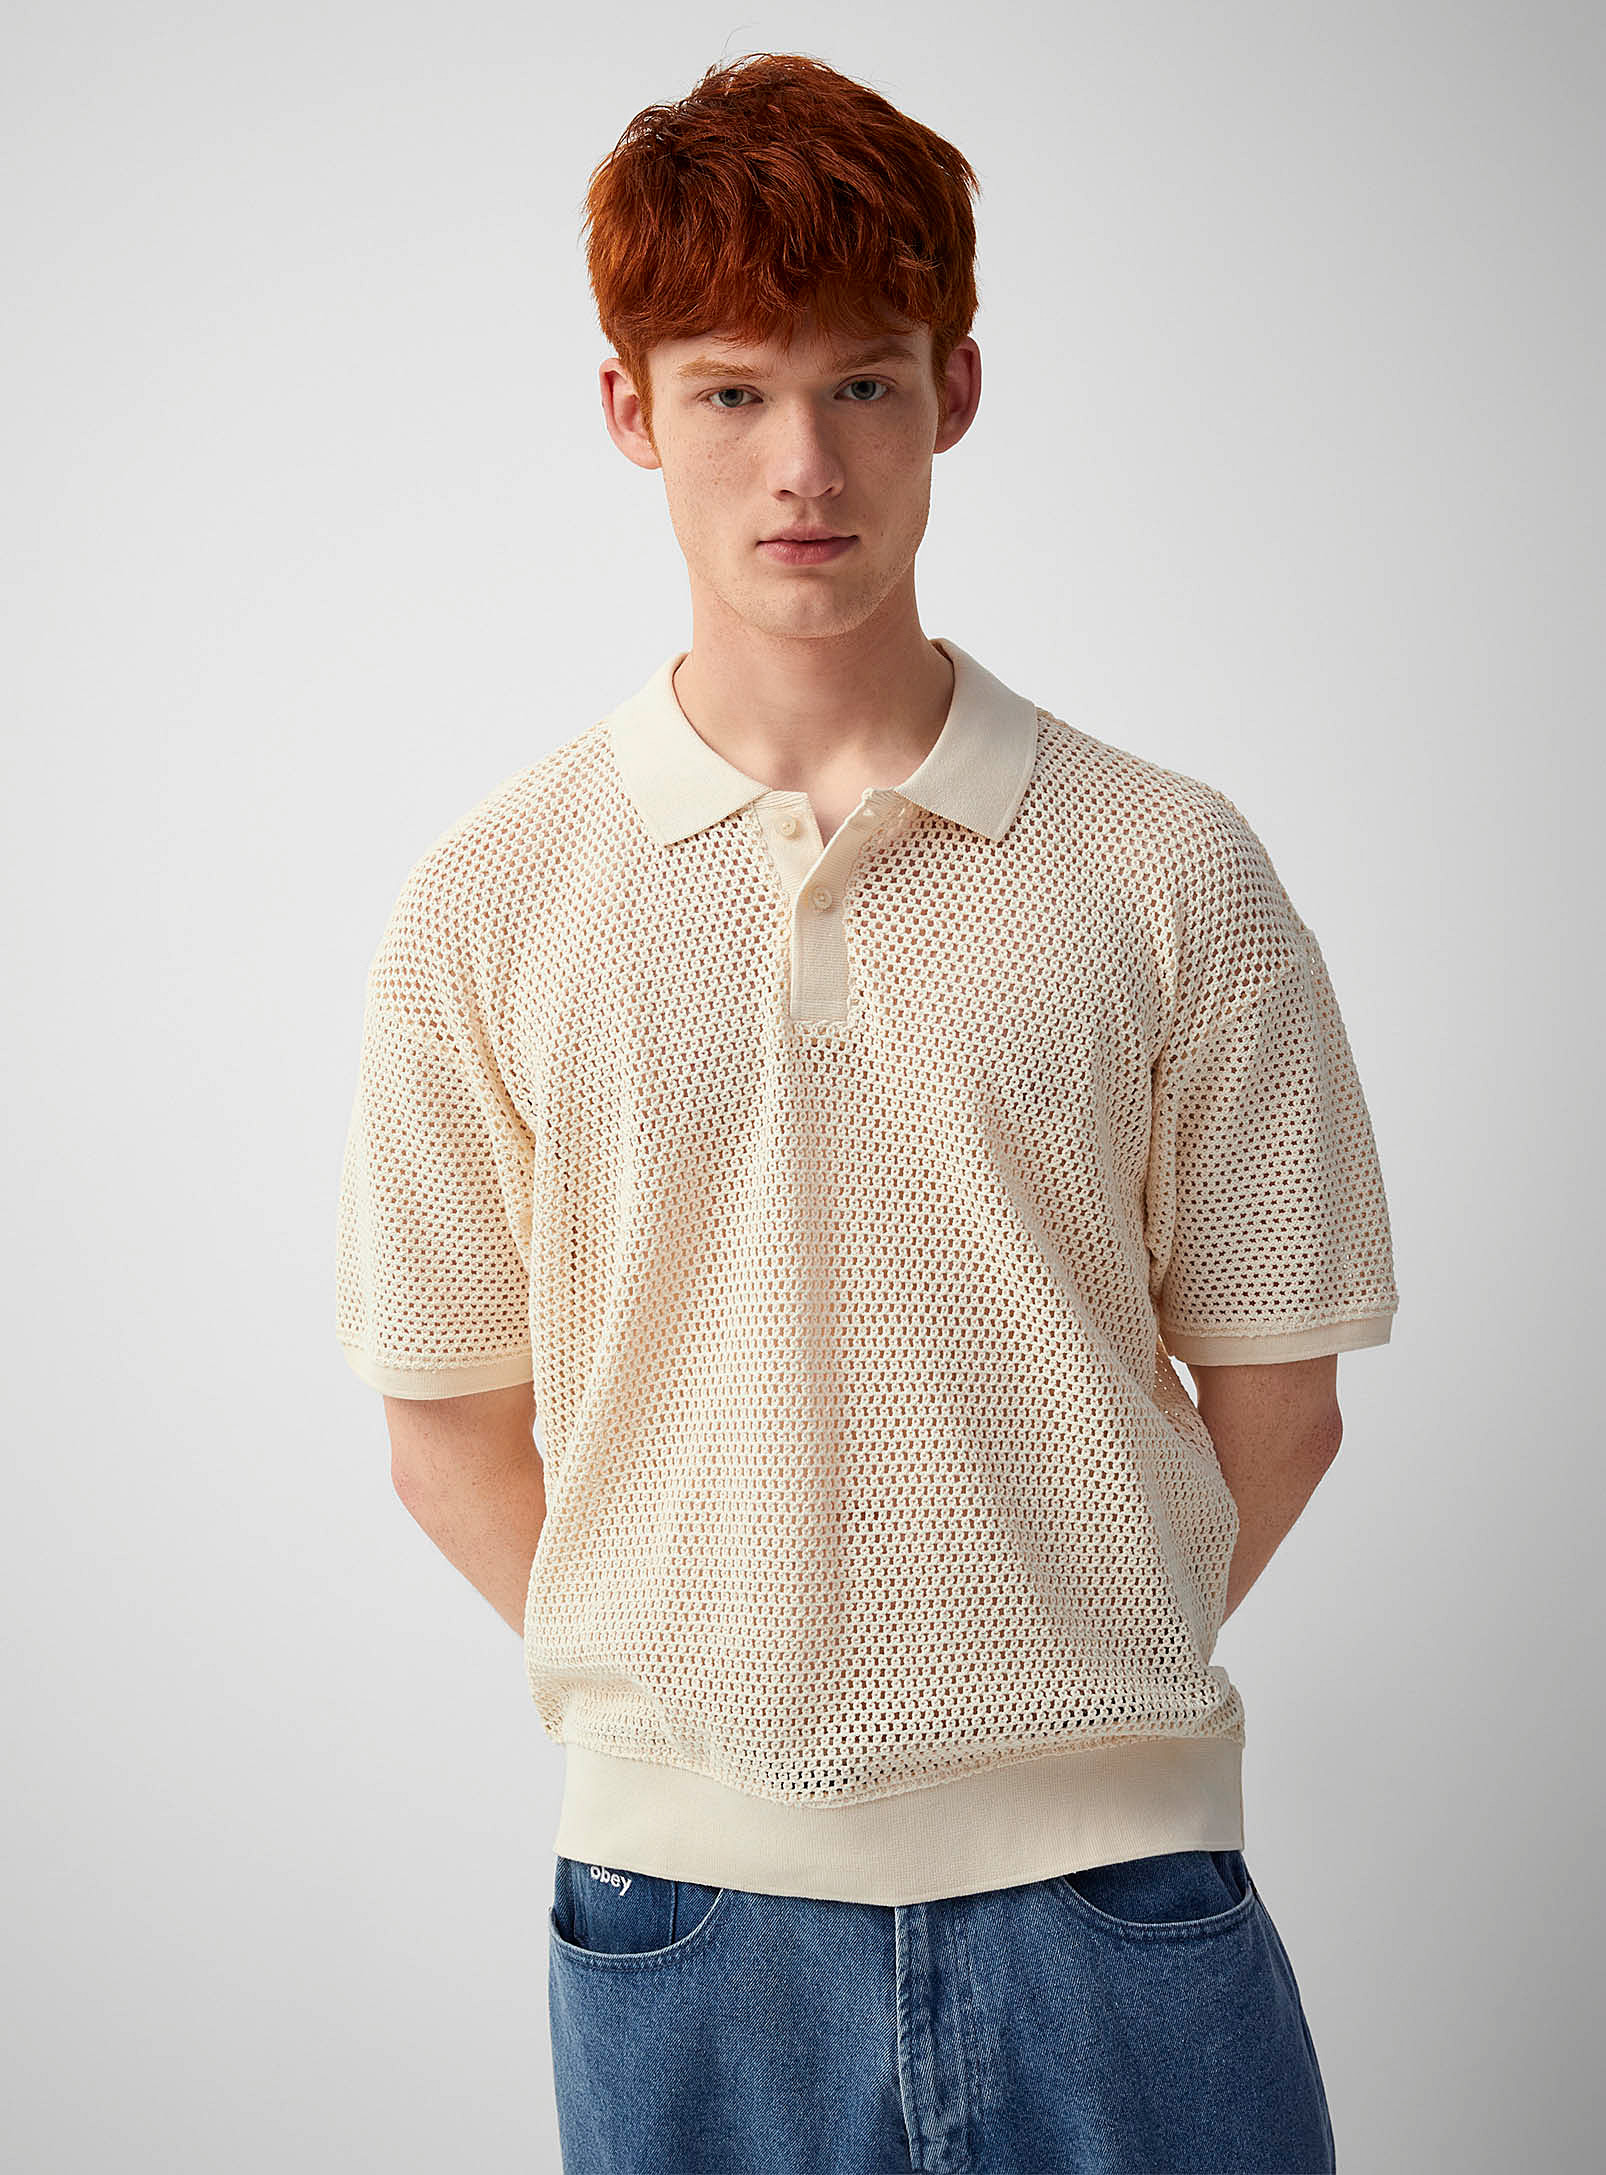 Obey - Men's Cream crochet Polo Shirt